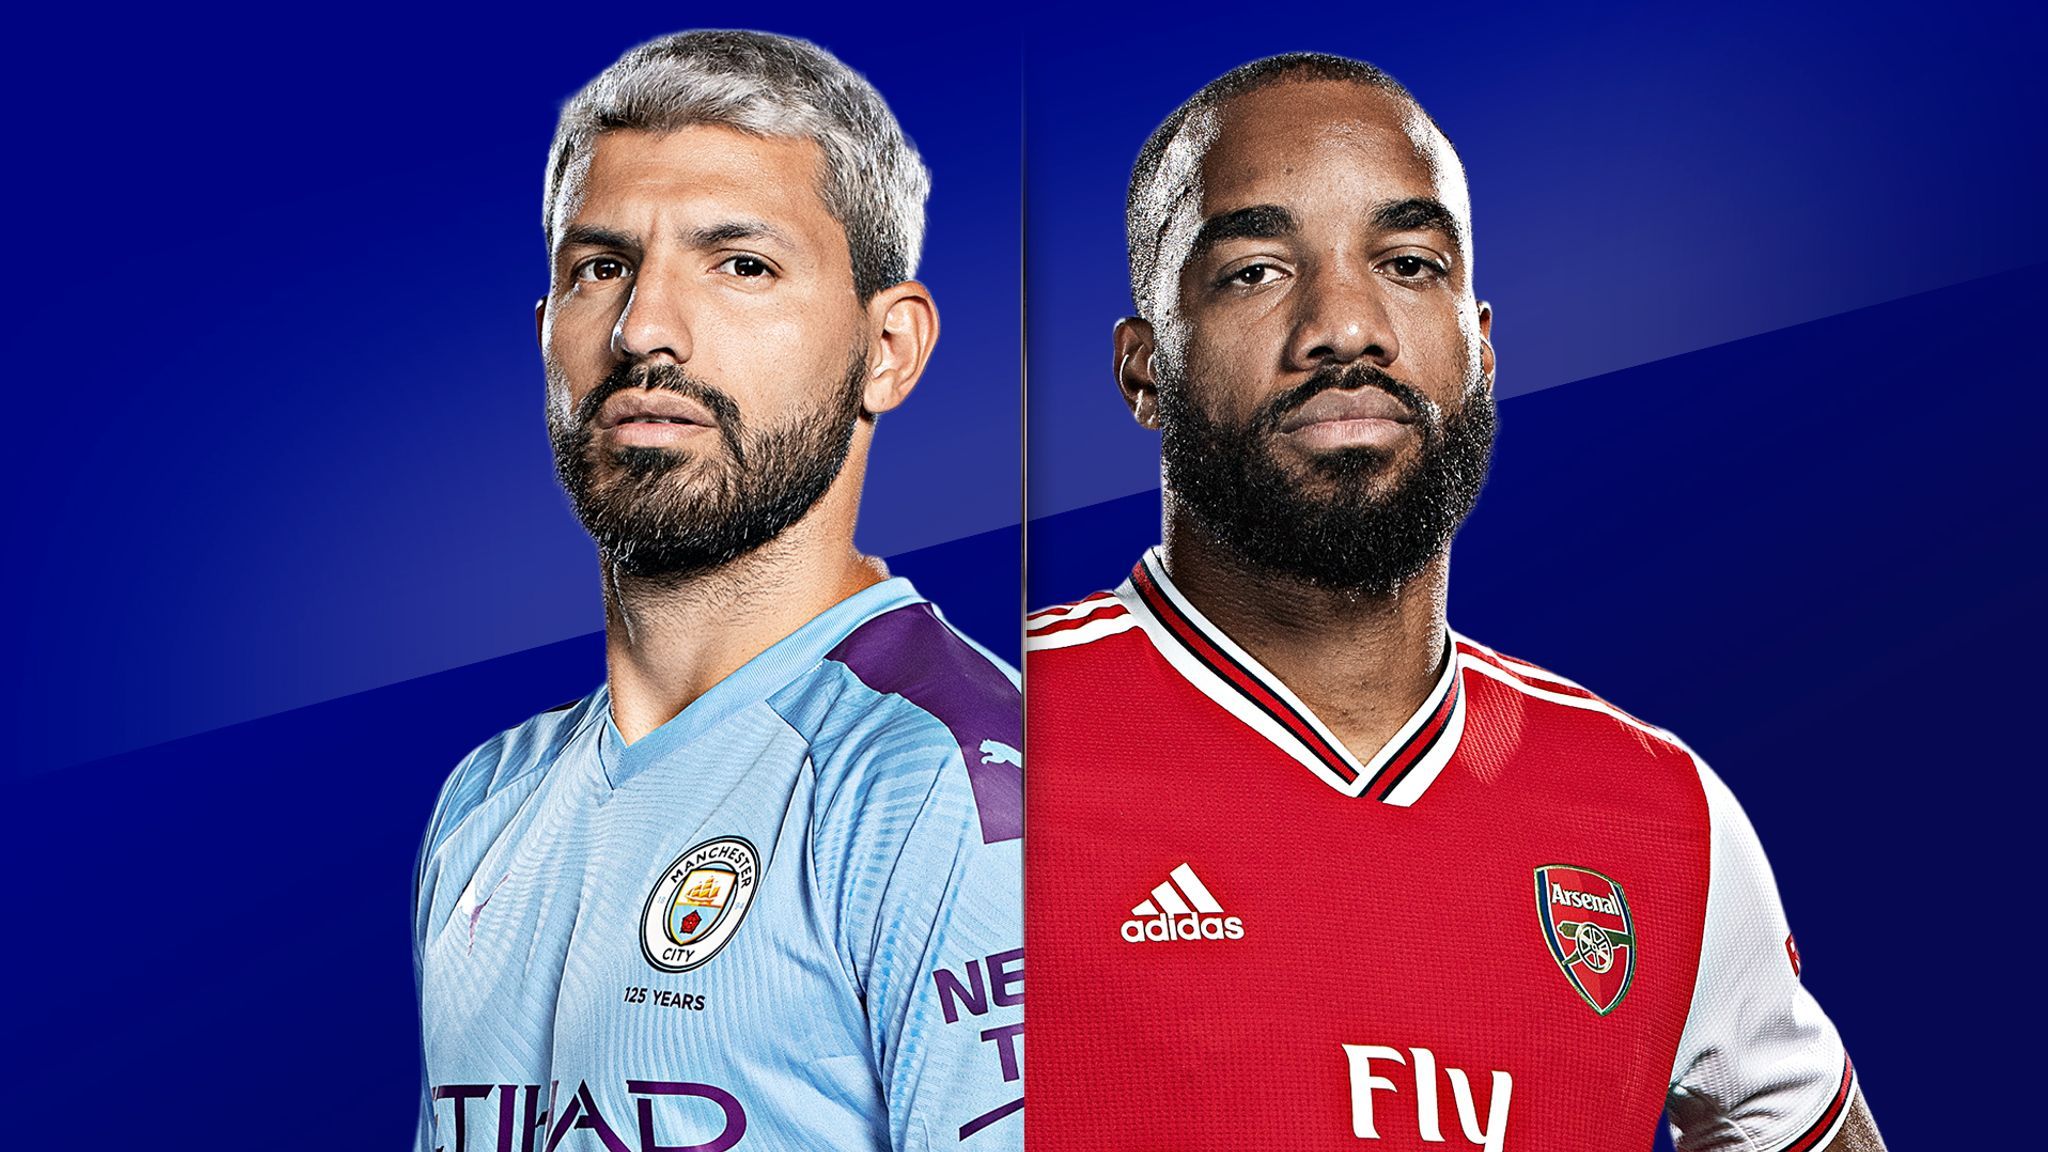 Live match preview City vs Arsenal 17.06.2020